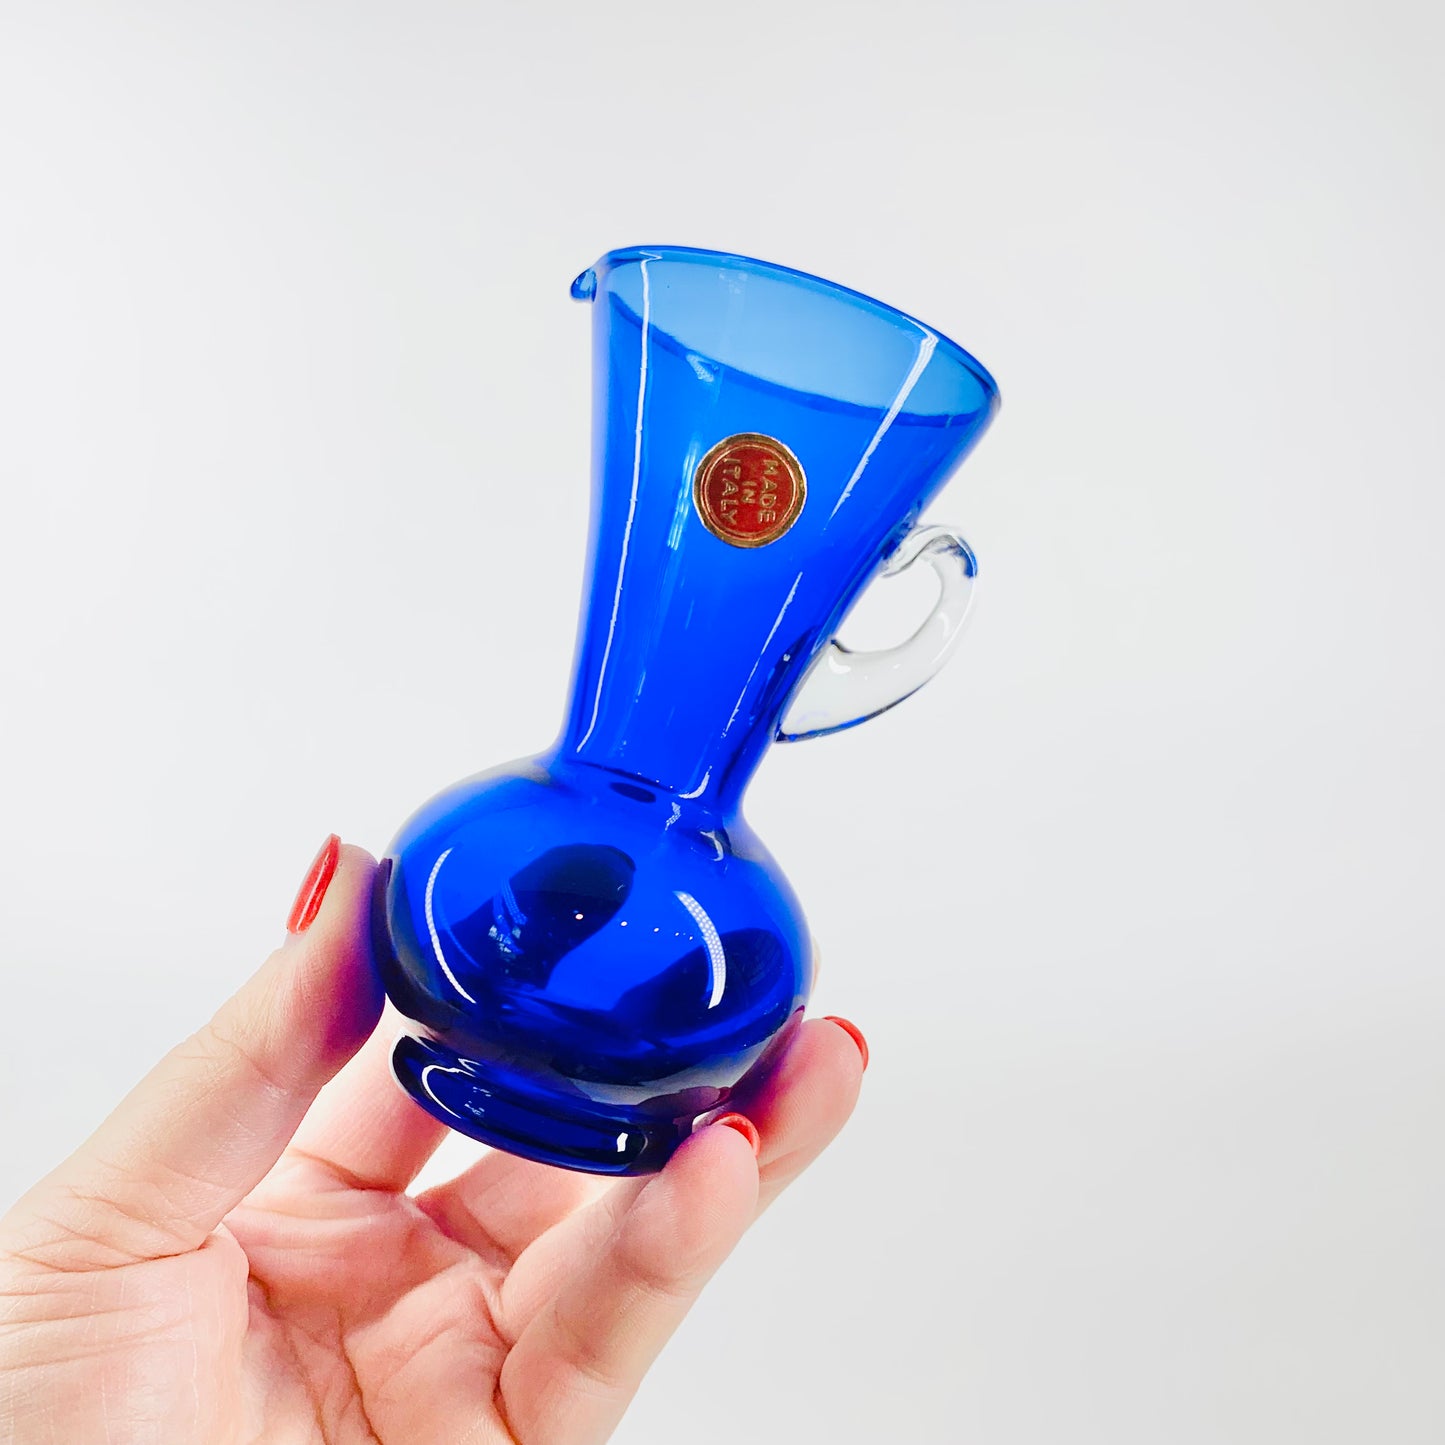 Midcentury Italian mini blue glass pitcher vase